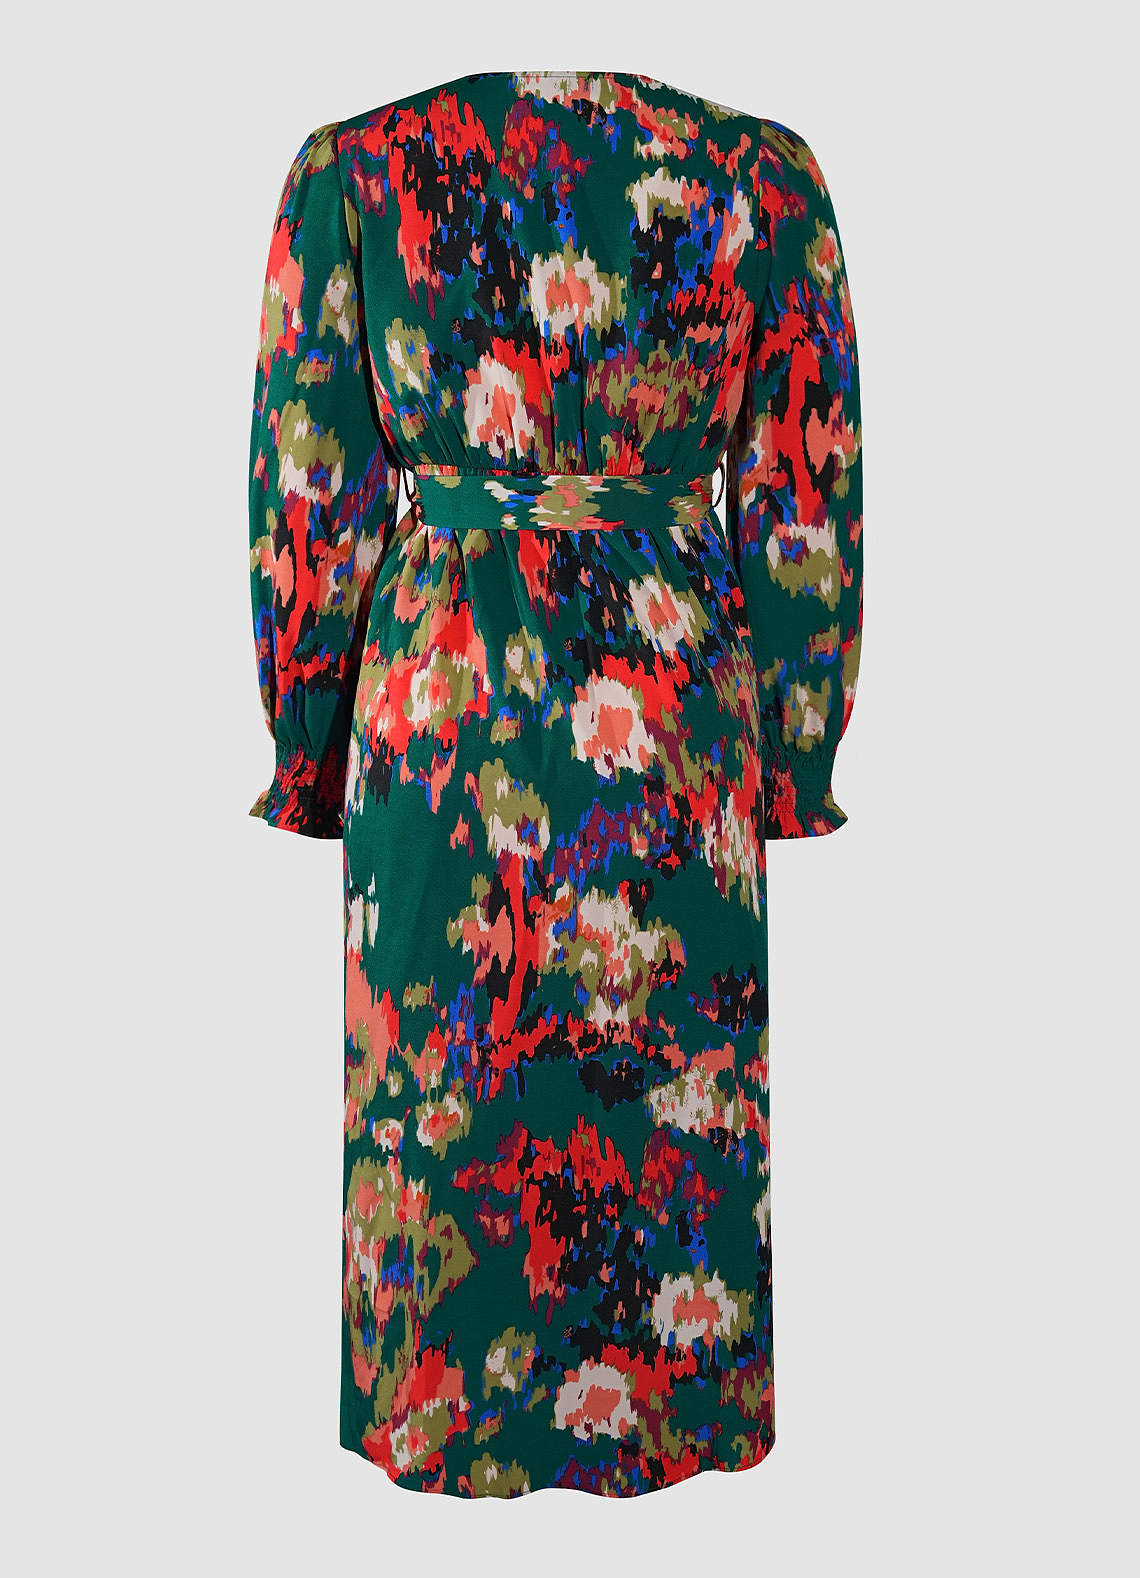 Nichols Dark Emerald Abstract Print Long Sleeve Tulip Dress image1